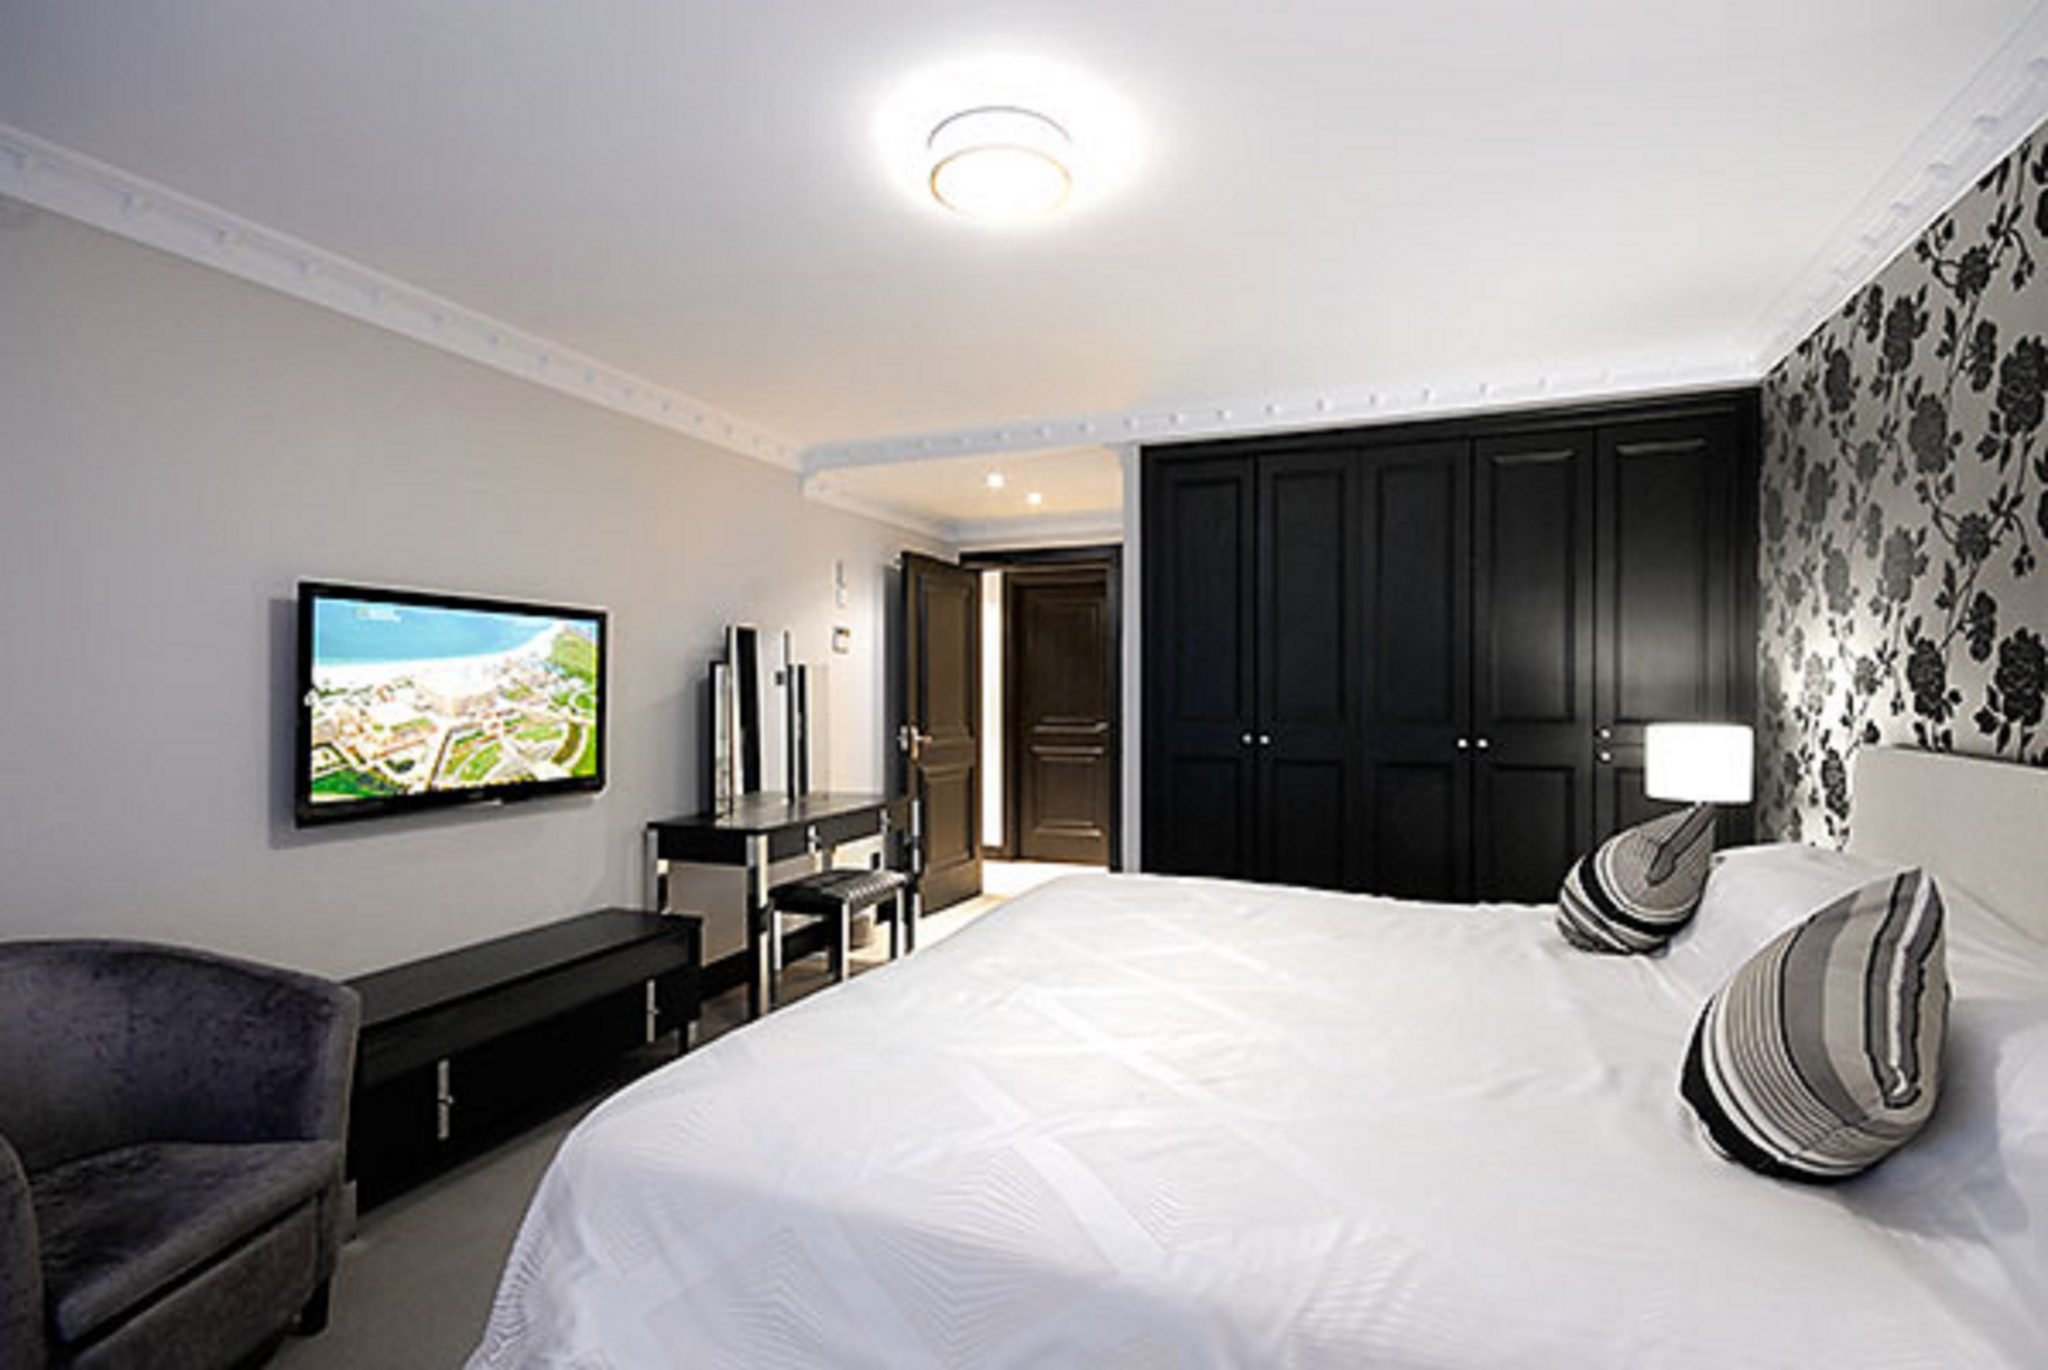 4. Shepherd Street Apartments 3 bedroom tv bed.jpg